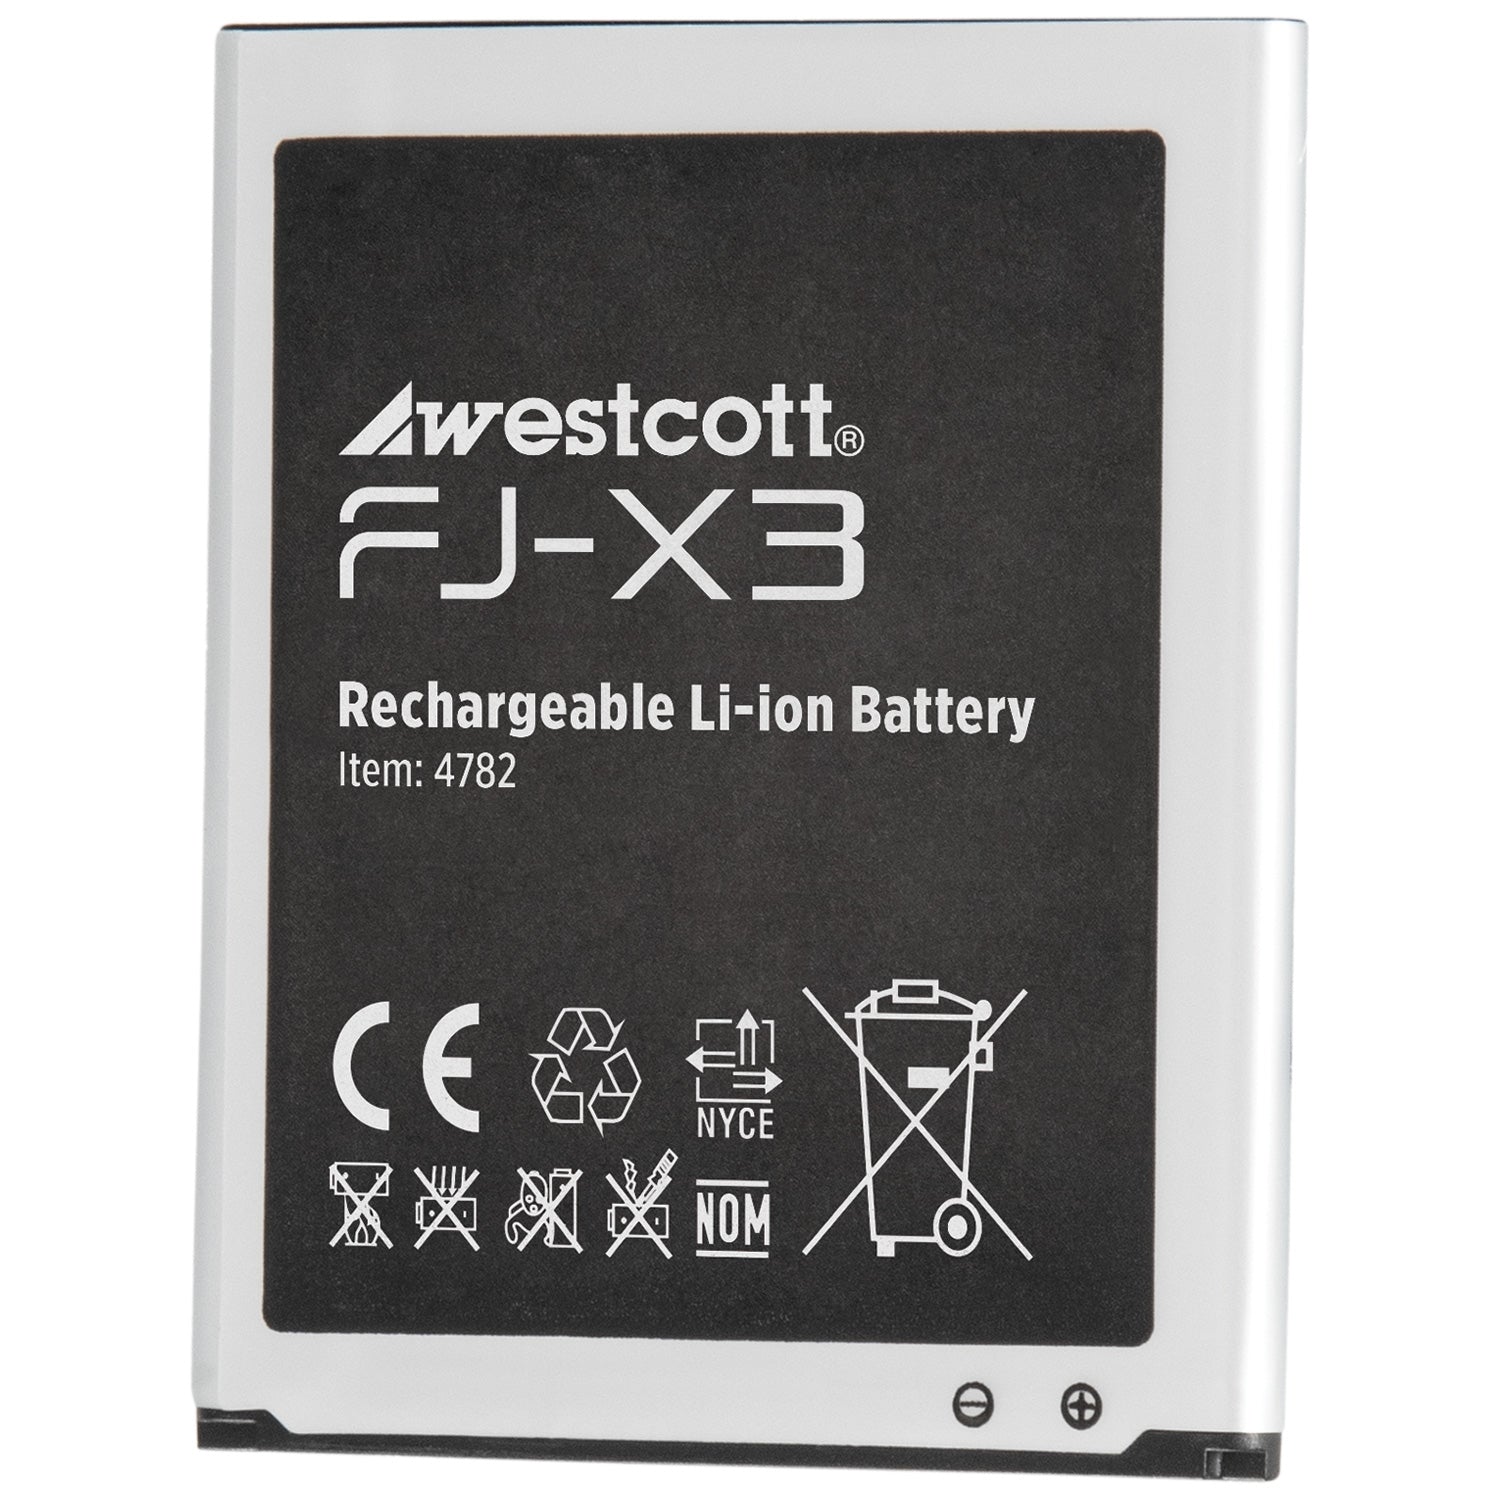 Product Image of Westcott FJ-X3 Battery for FJ-X3M and FJ-X3S Wireless Flash Triggers